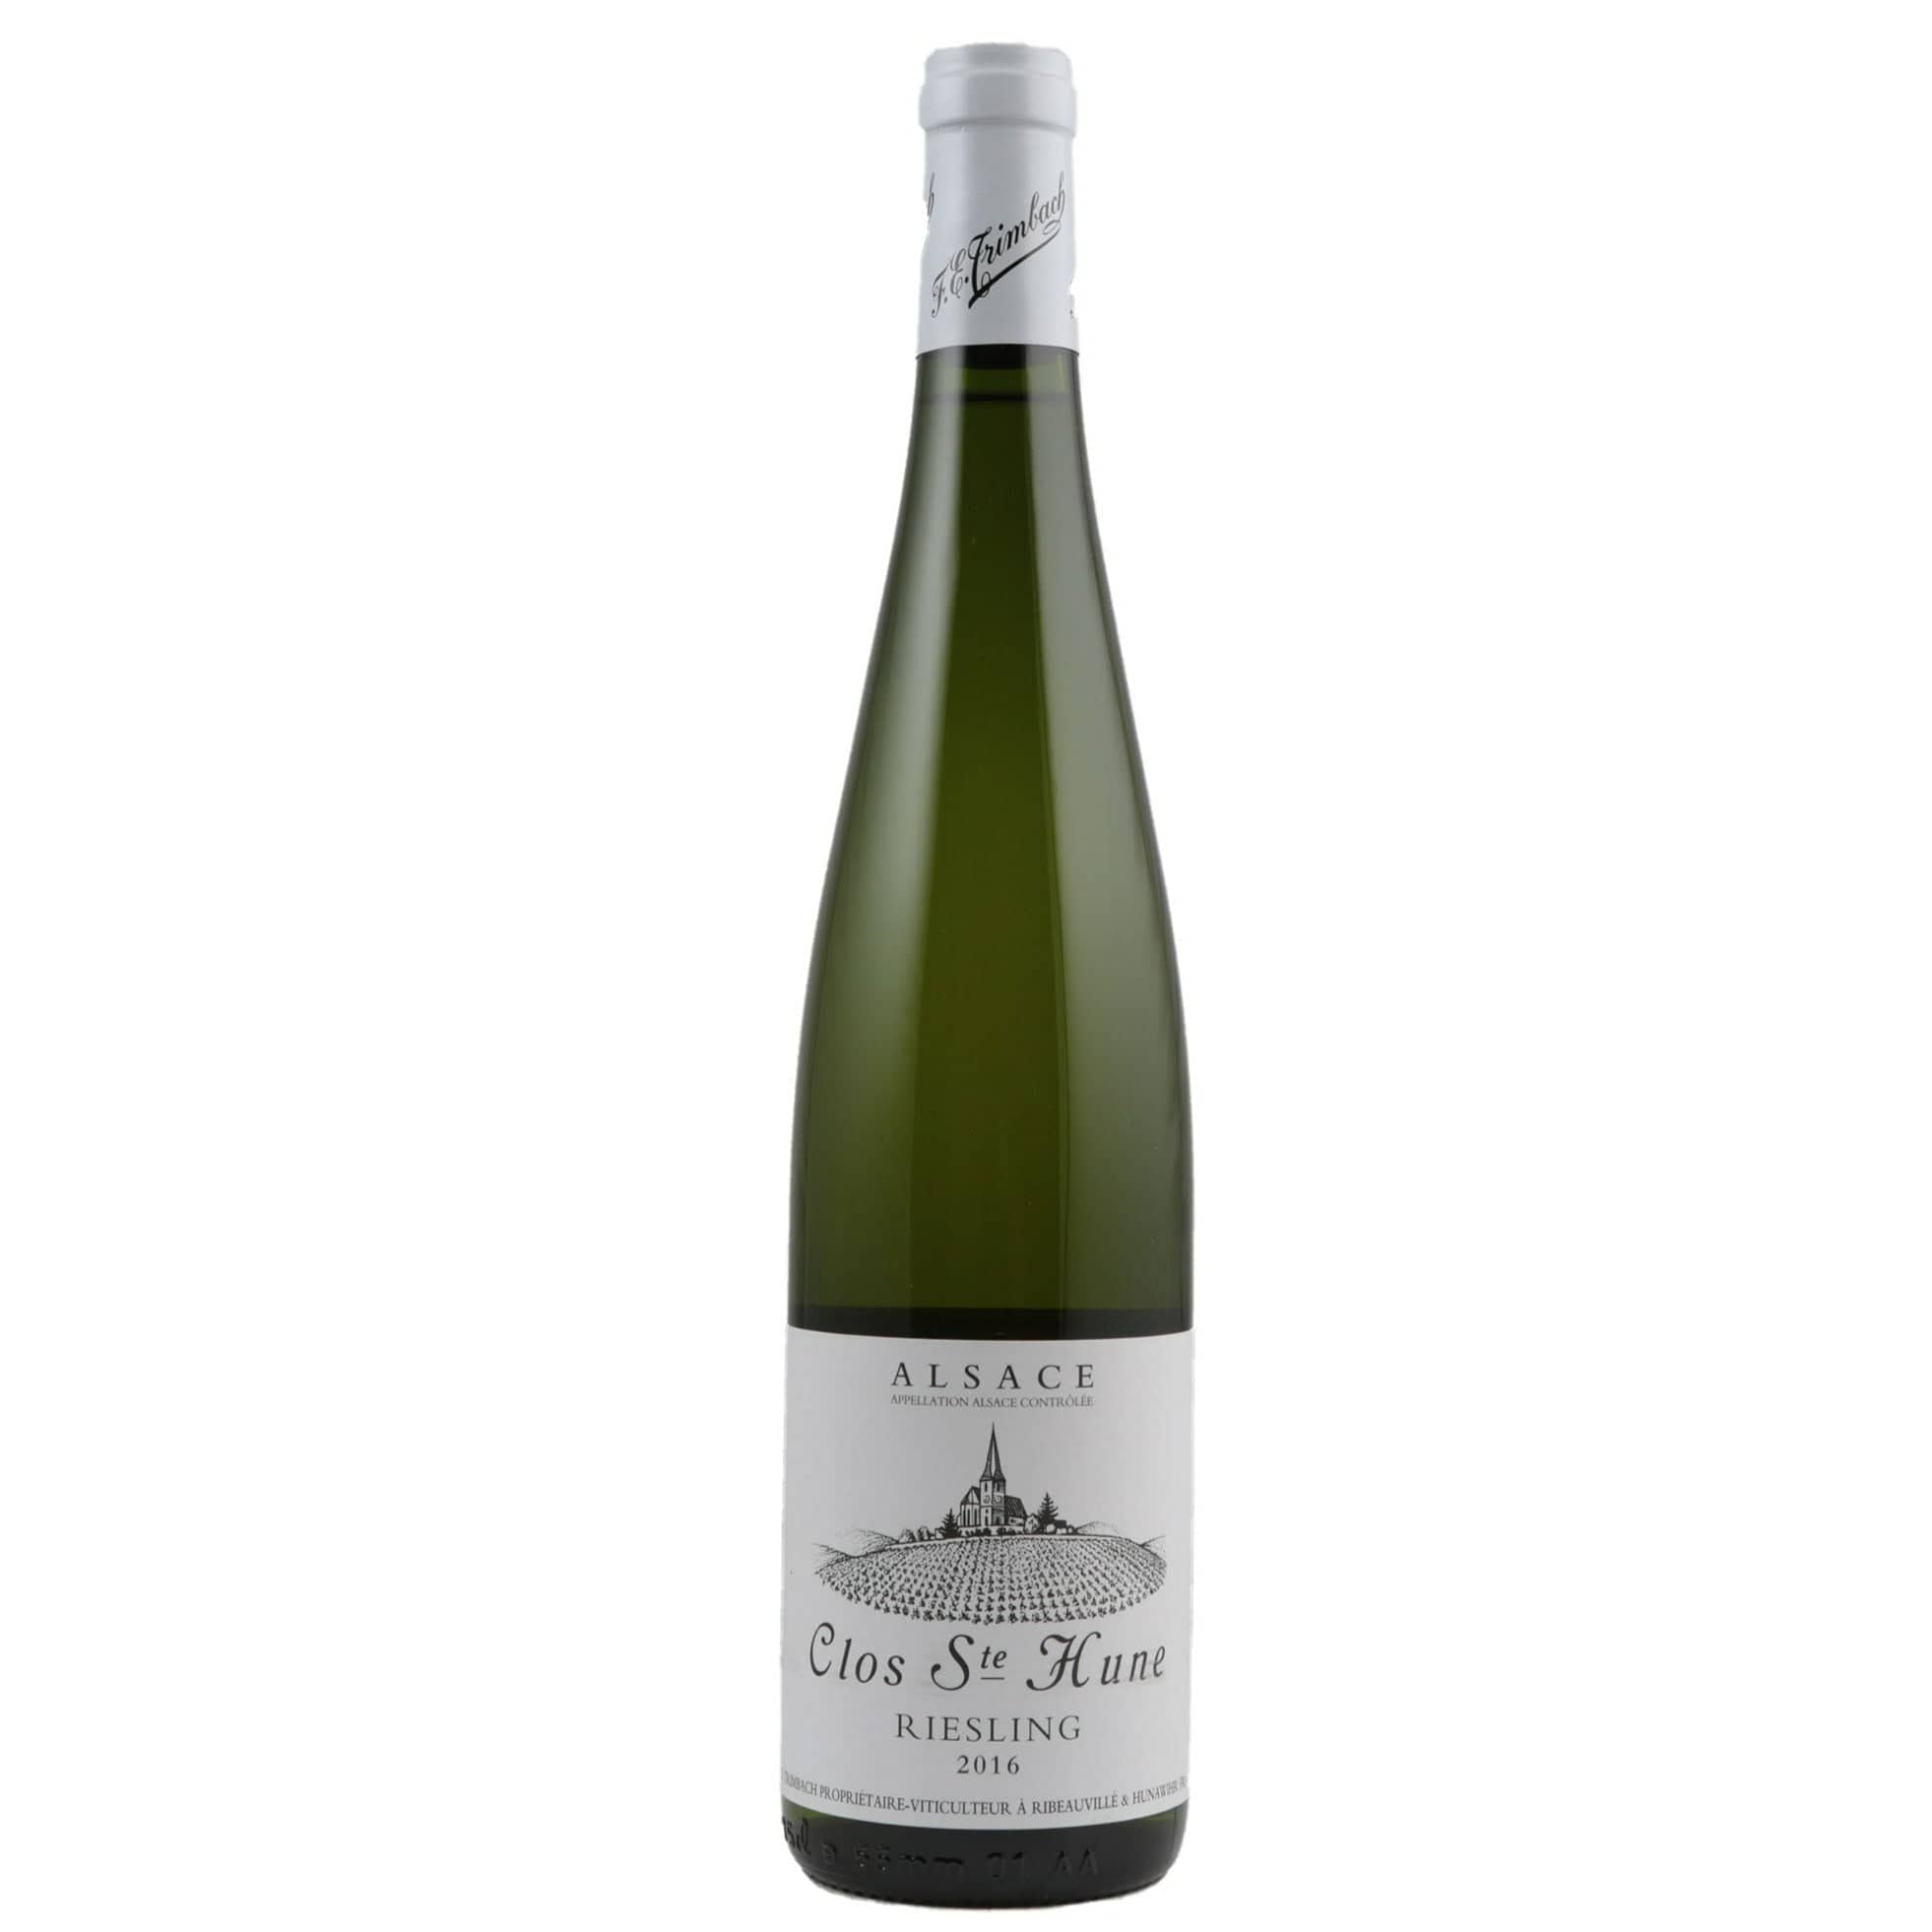 Single bottle of White wine Maison Trimbach, Clos Sainte Hune, Alsace, 2016 100% Riesling